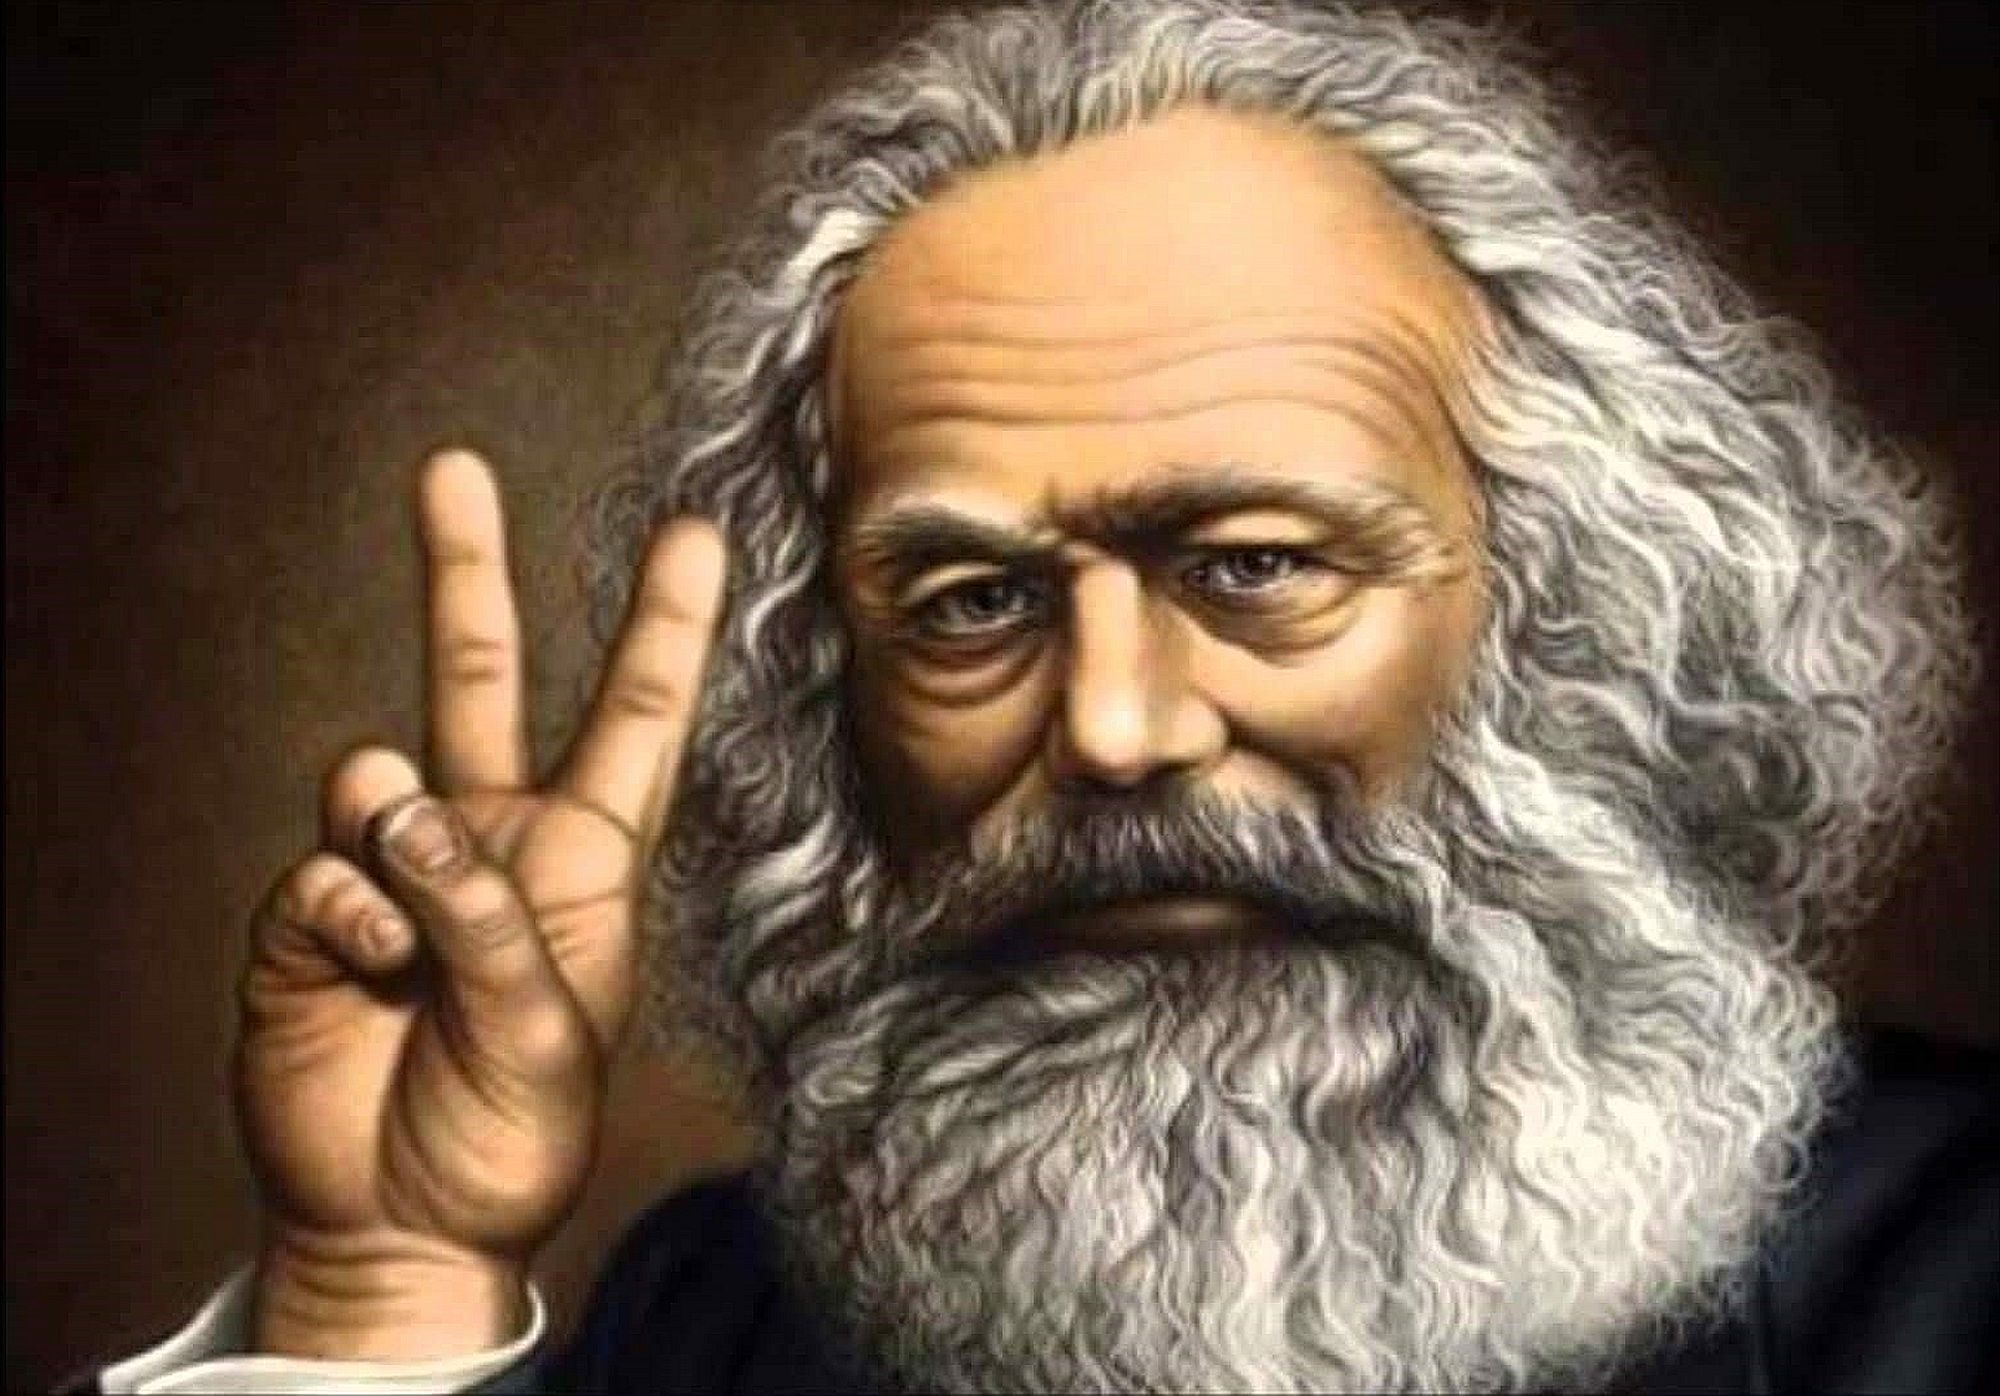 Karl Marx (1818-1883), philosopher, author, social theorist, and economist.